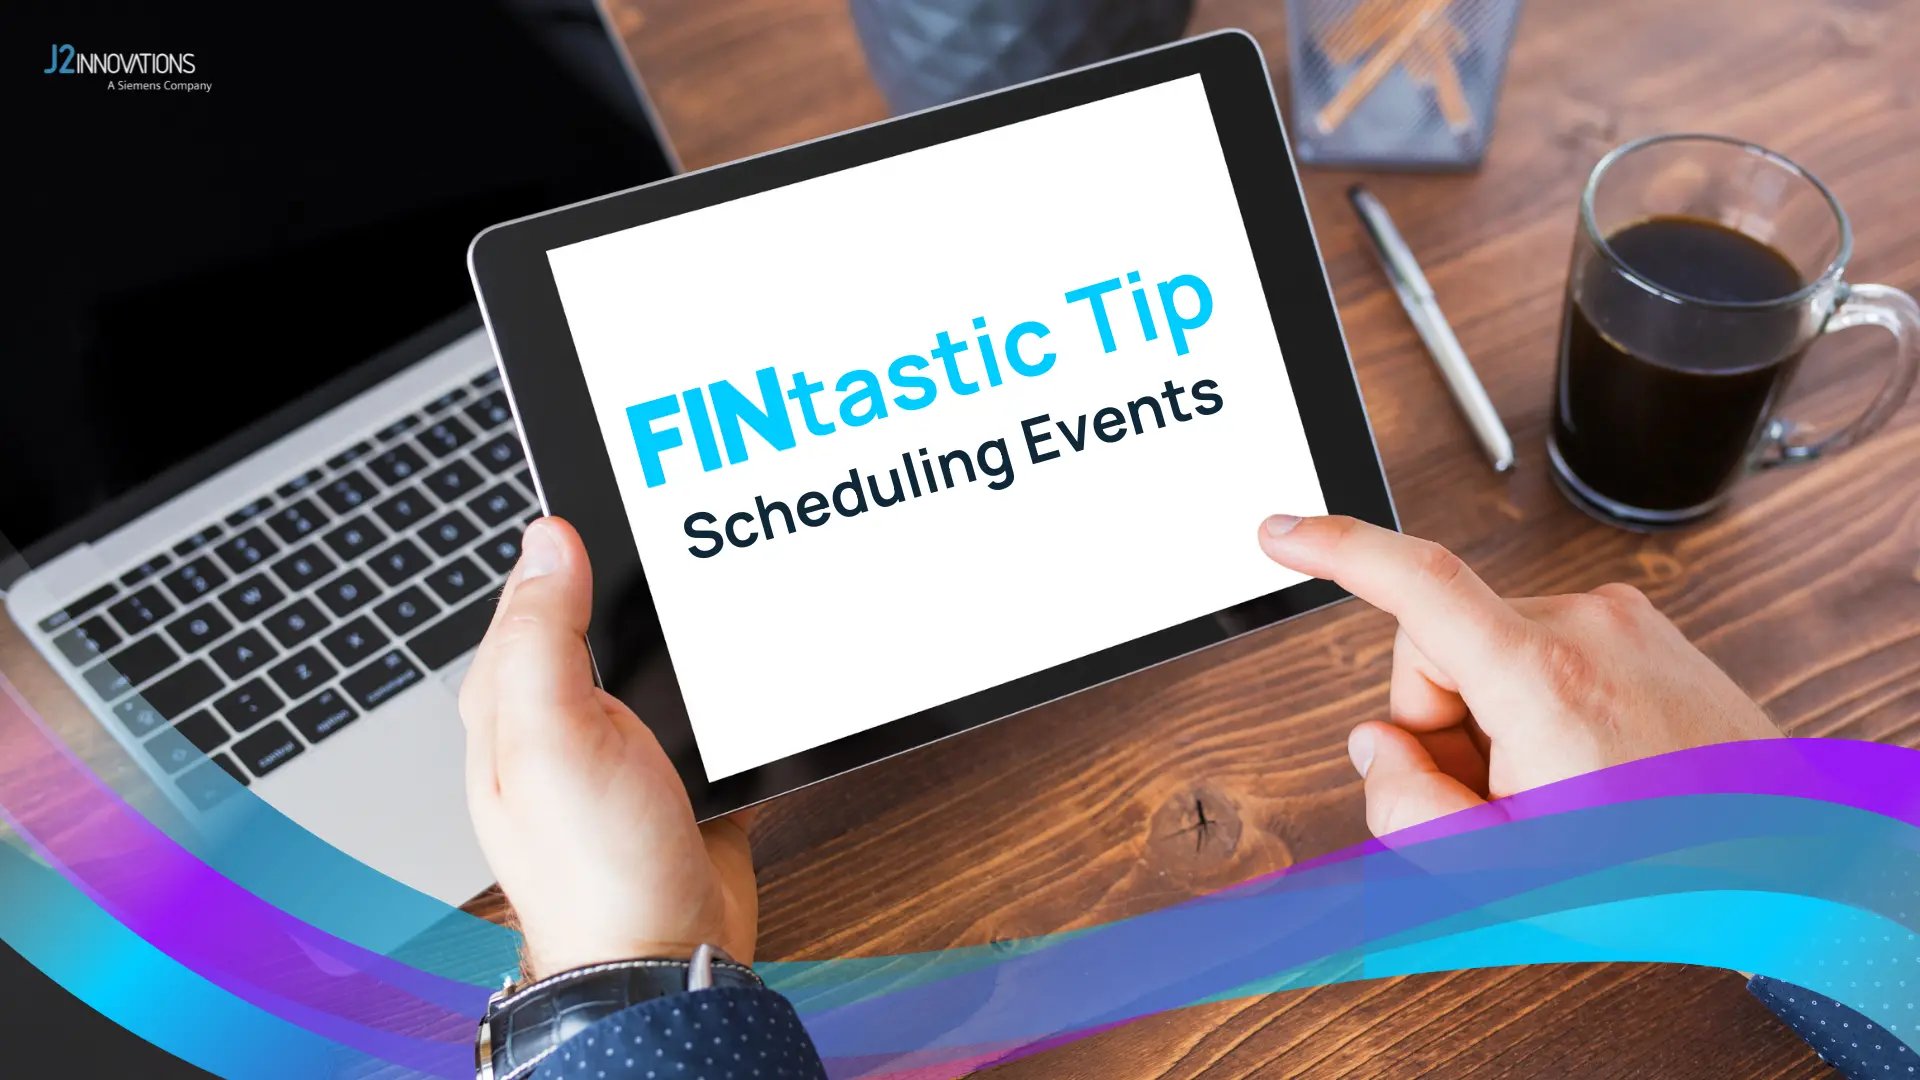 FINtastic Tip Schedules